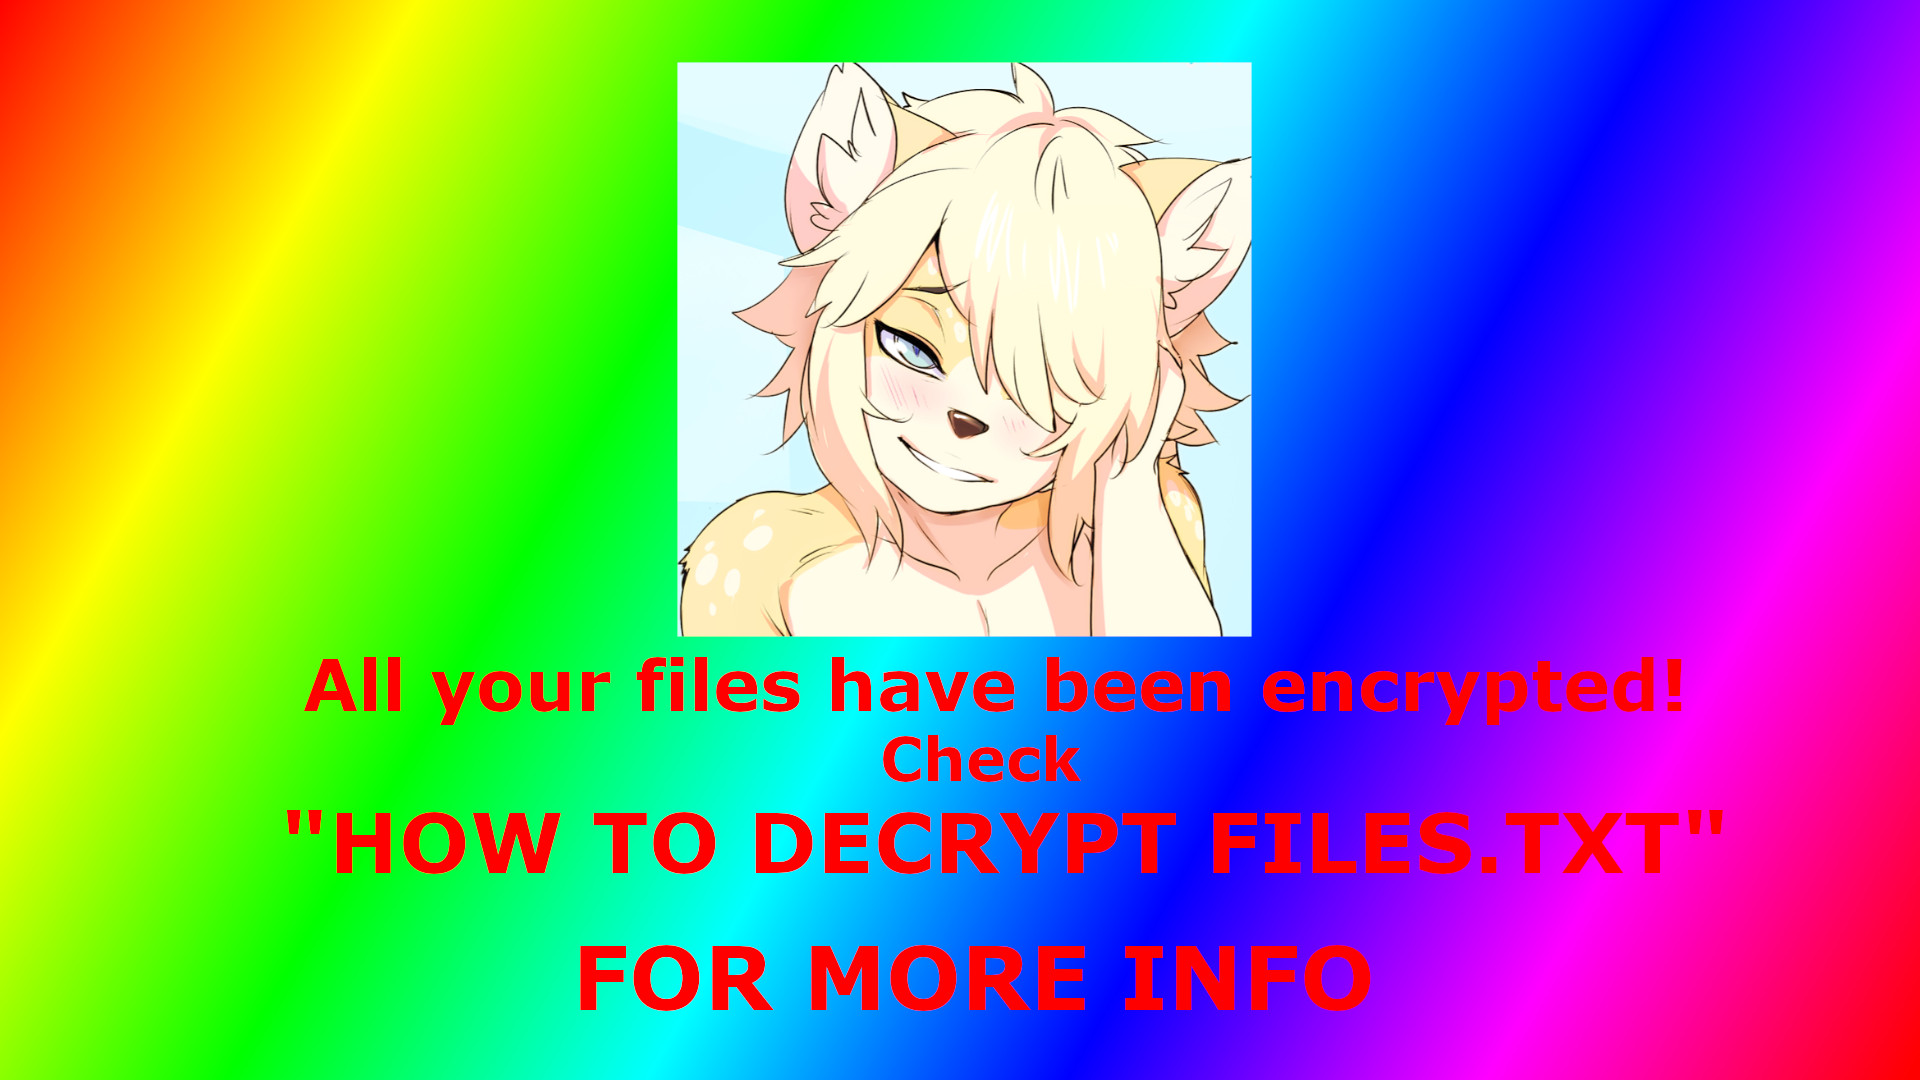 fappy ransomware lockscreen image